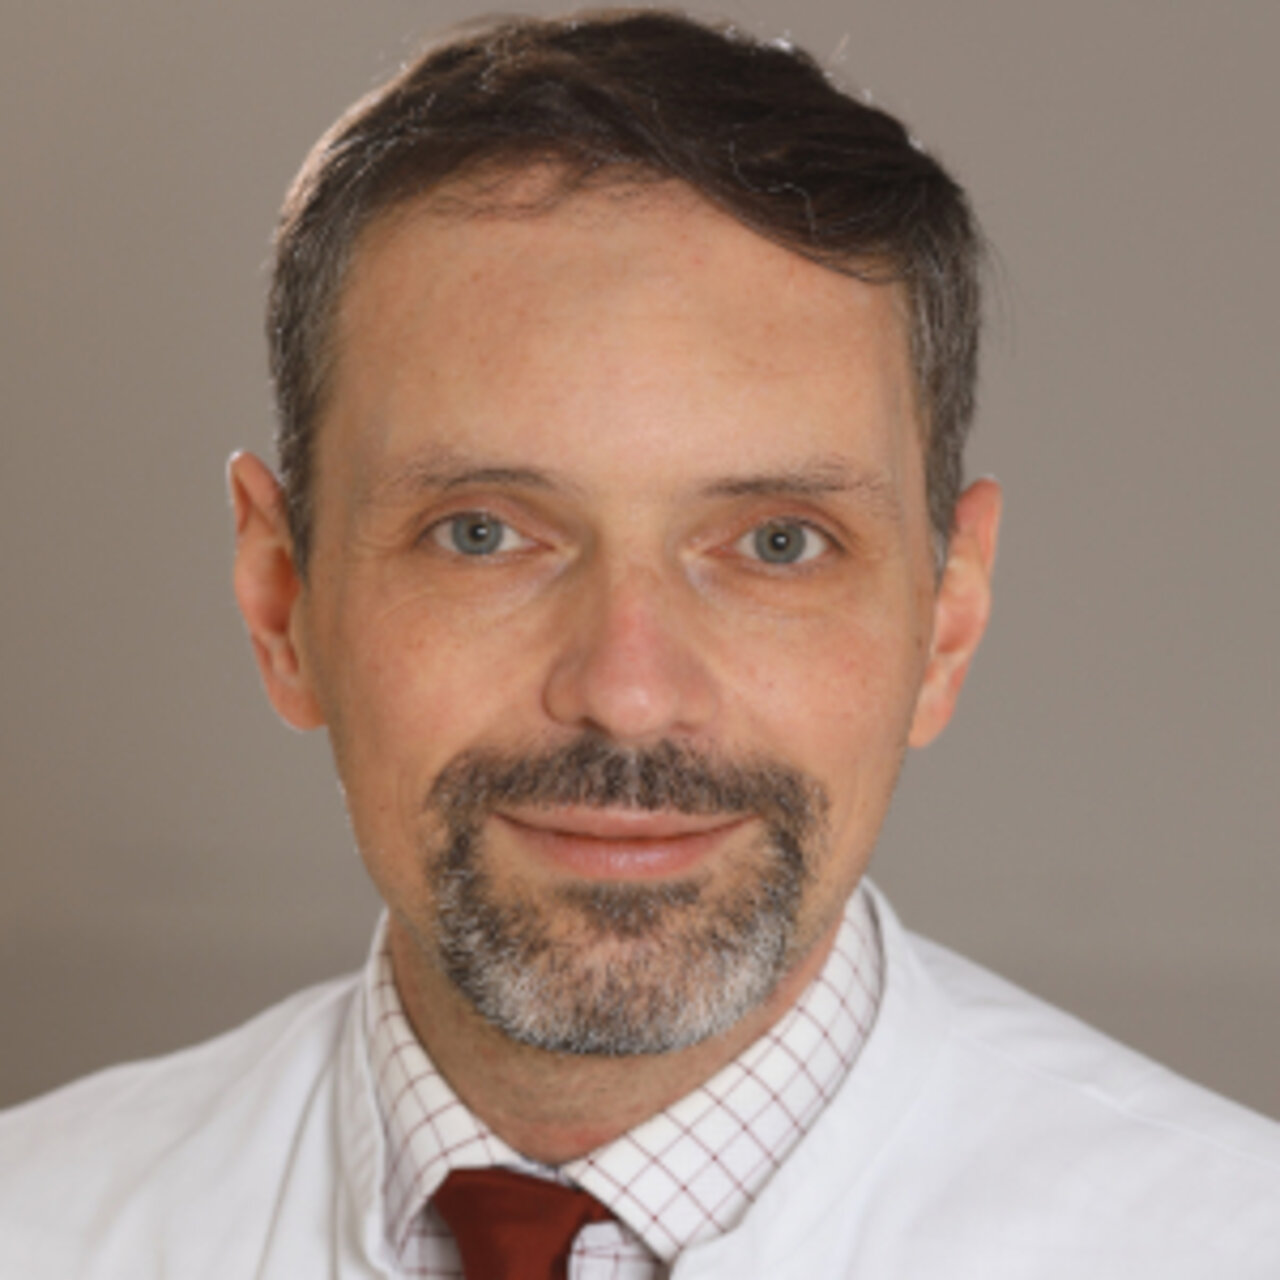 PD Dr. med. Christian Arsov - Spezialist Prostatakrebs - Portrait